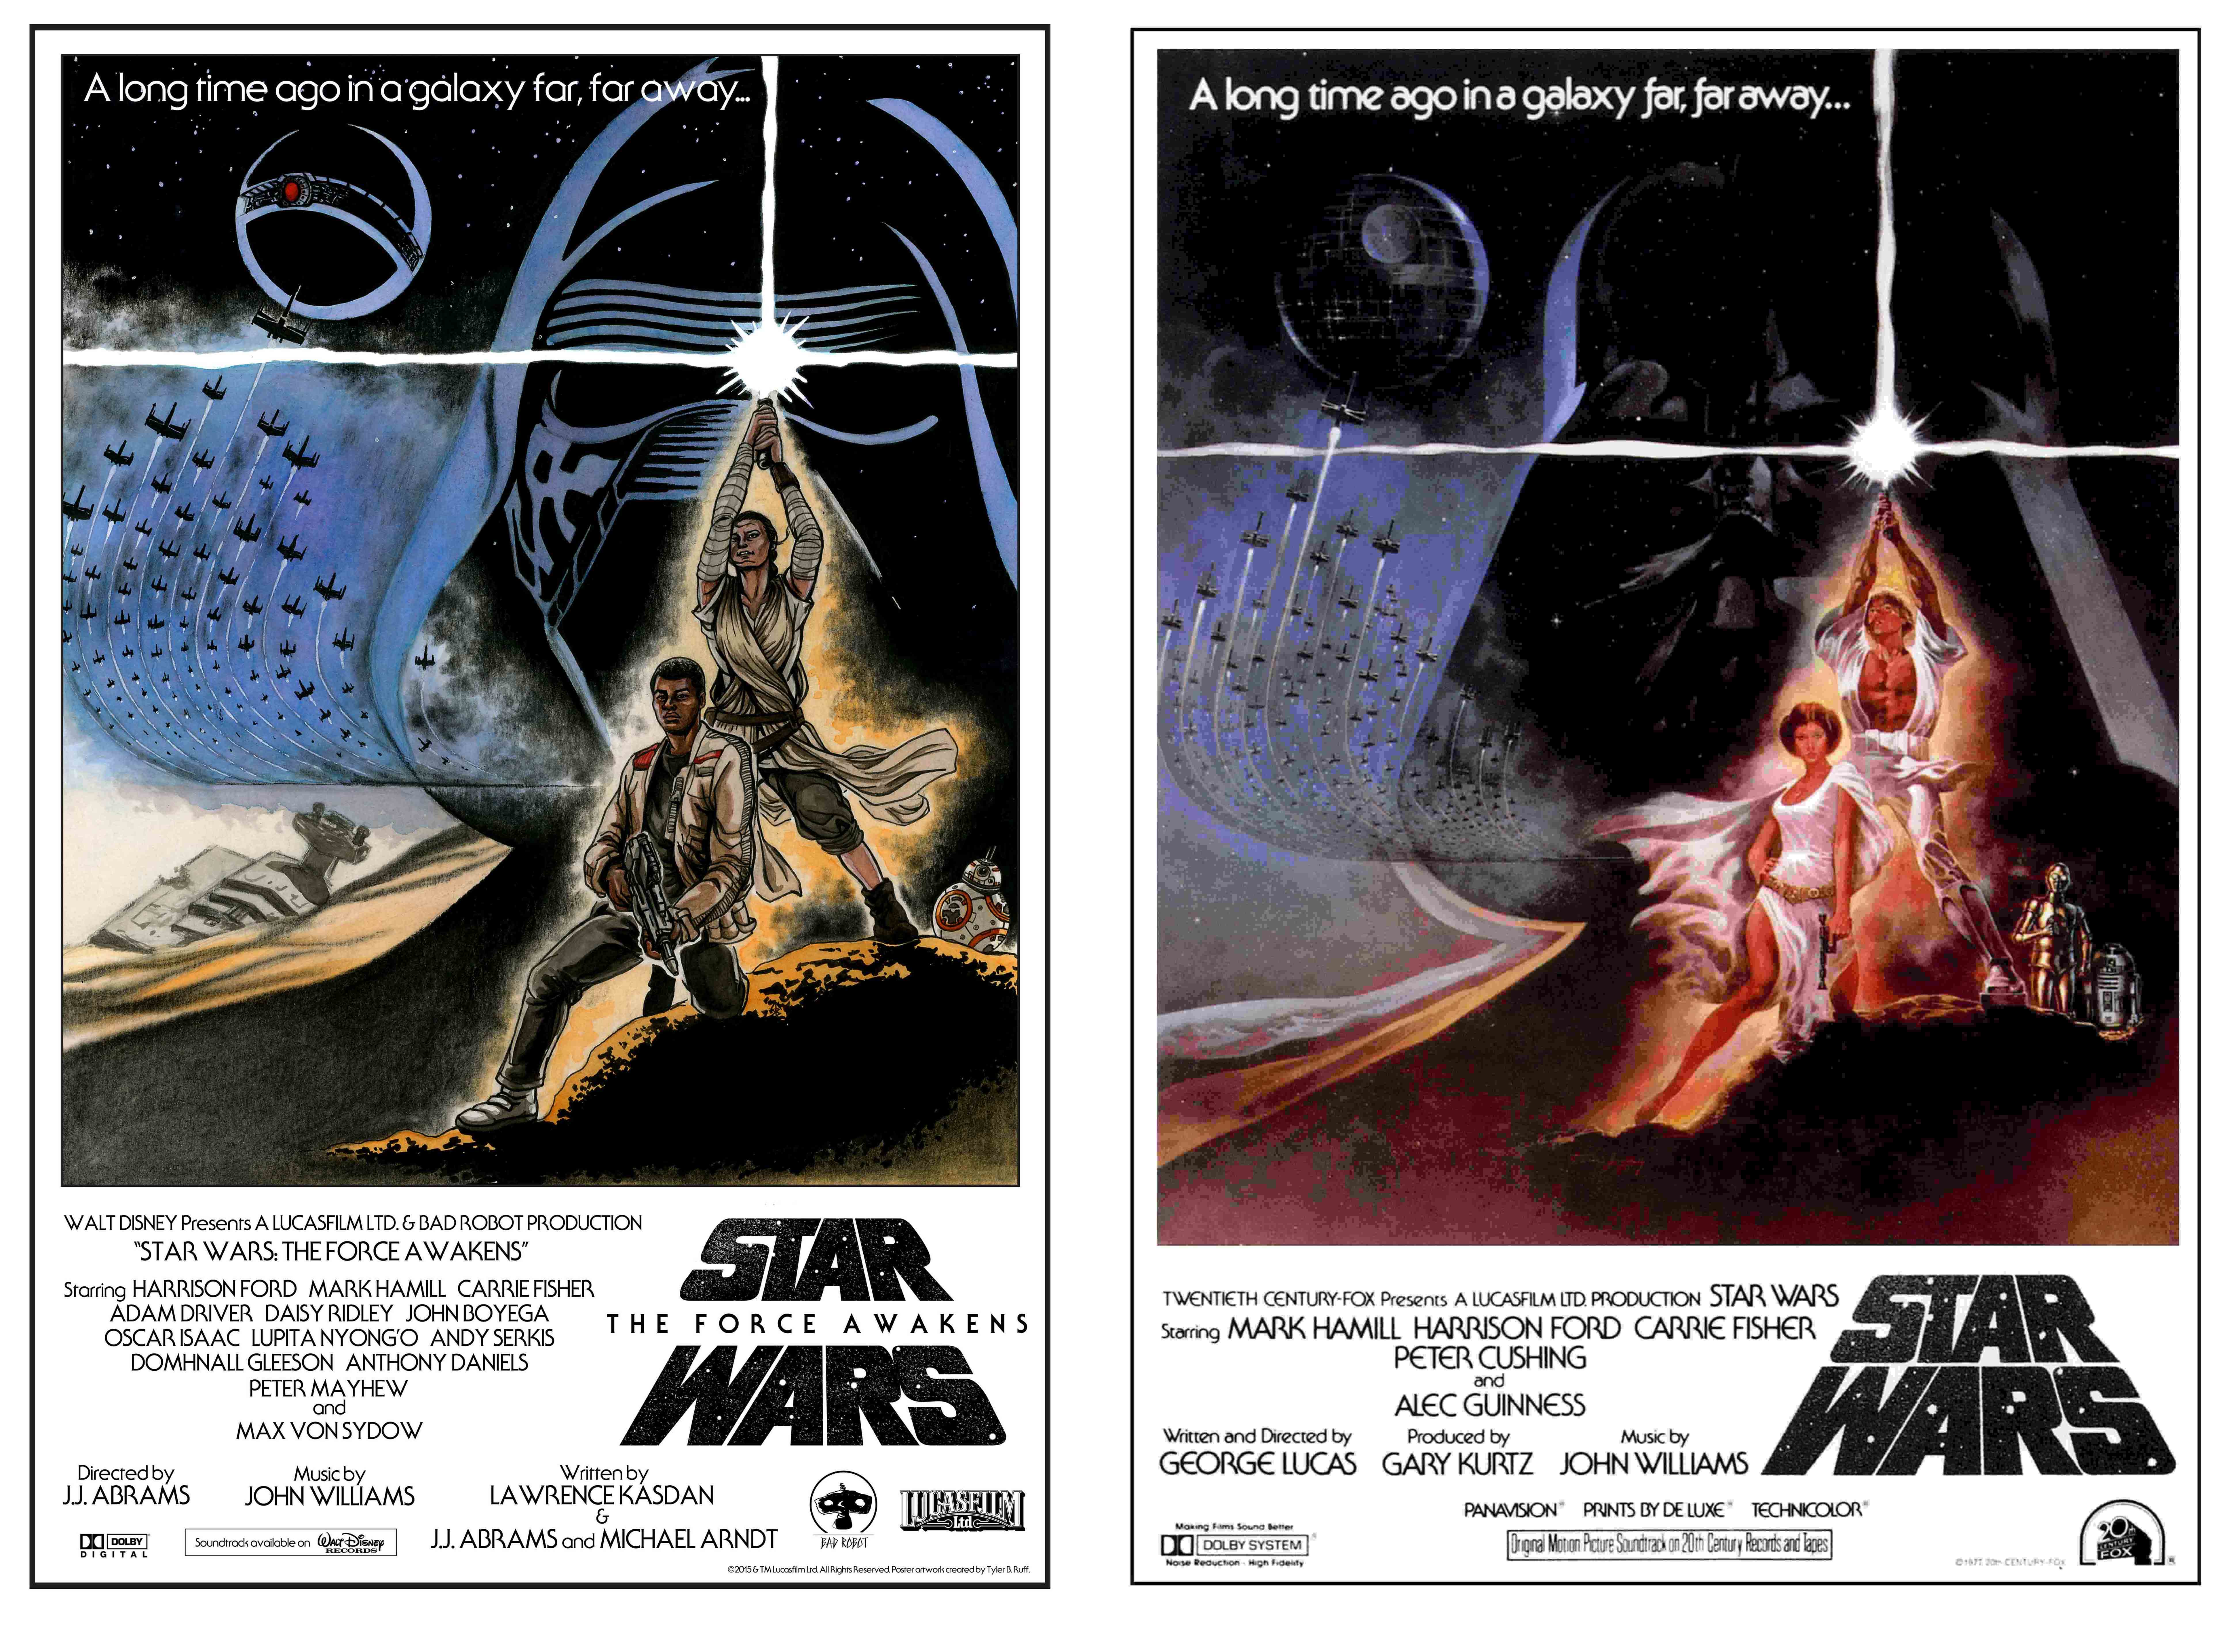 Poster for Star Wars Episode VII based on the original Episo